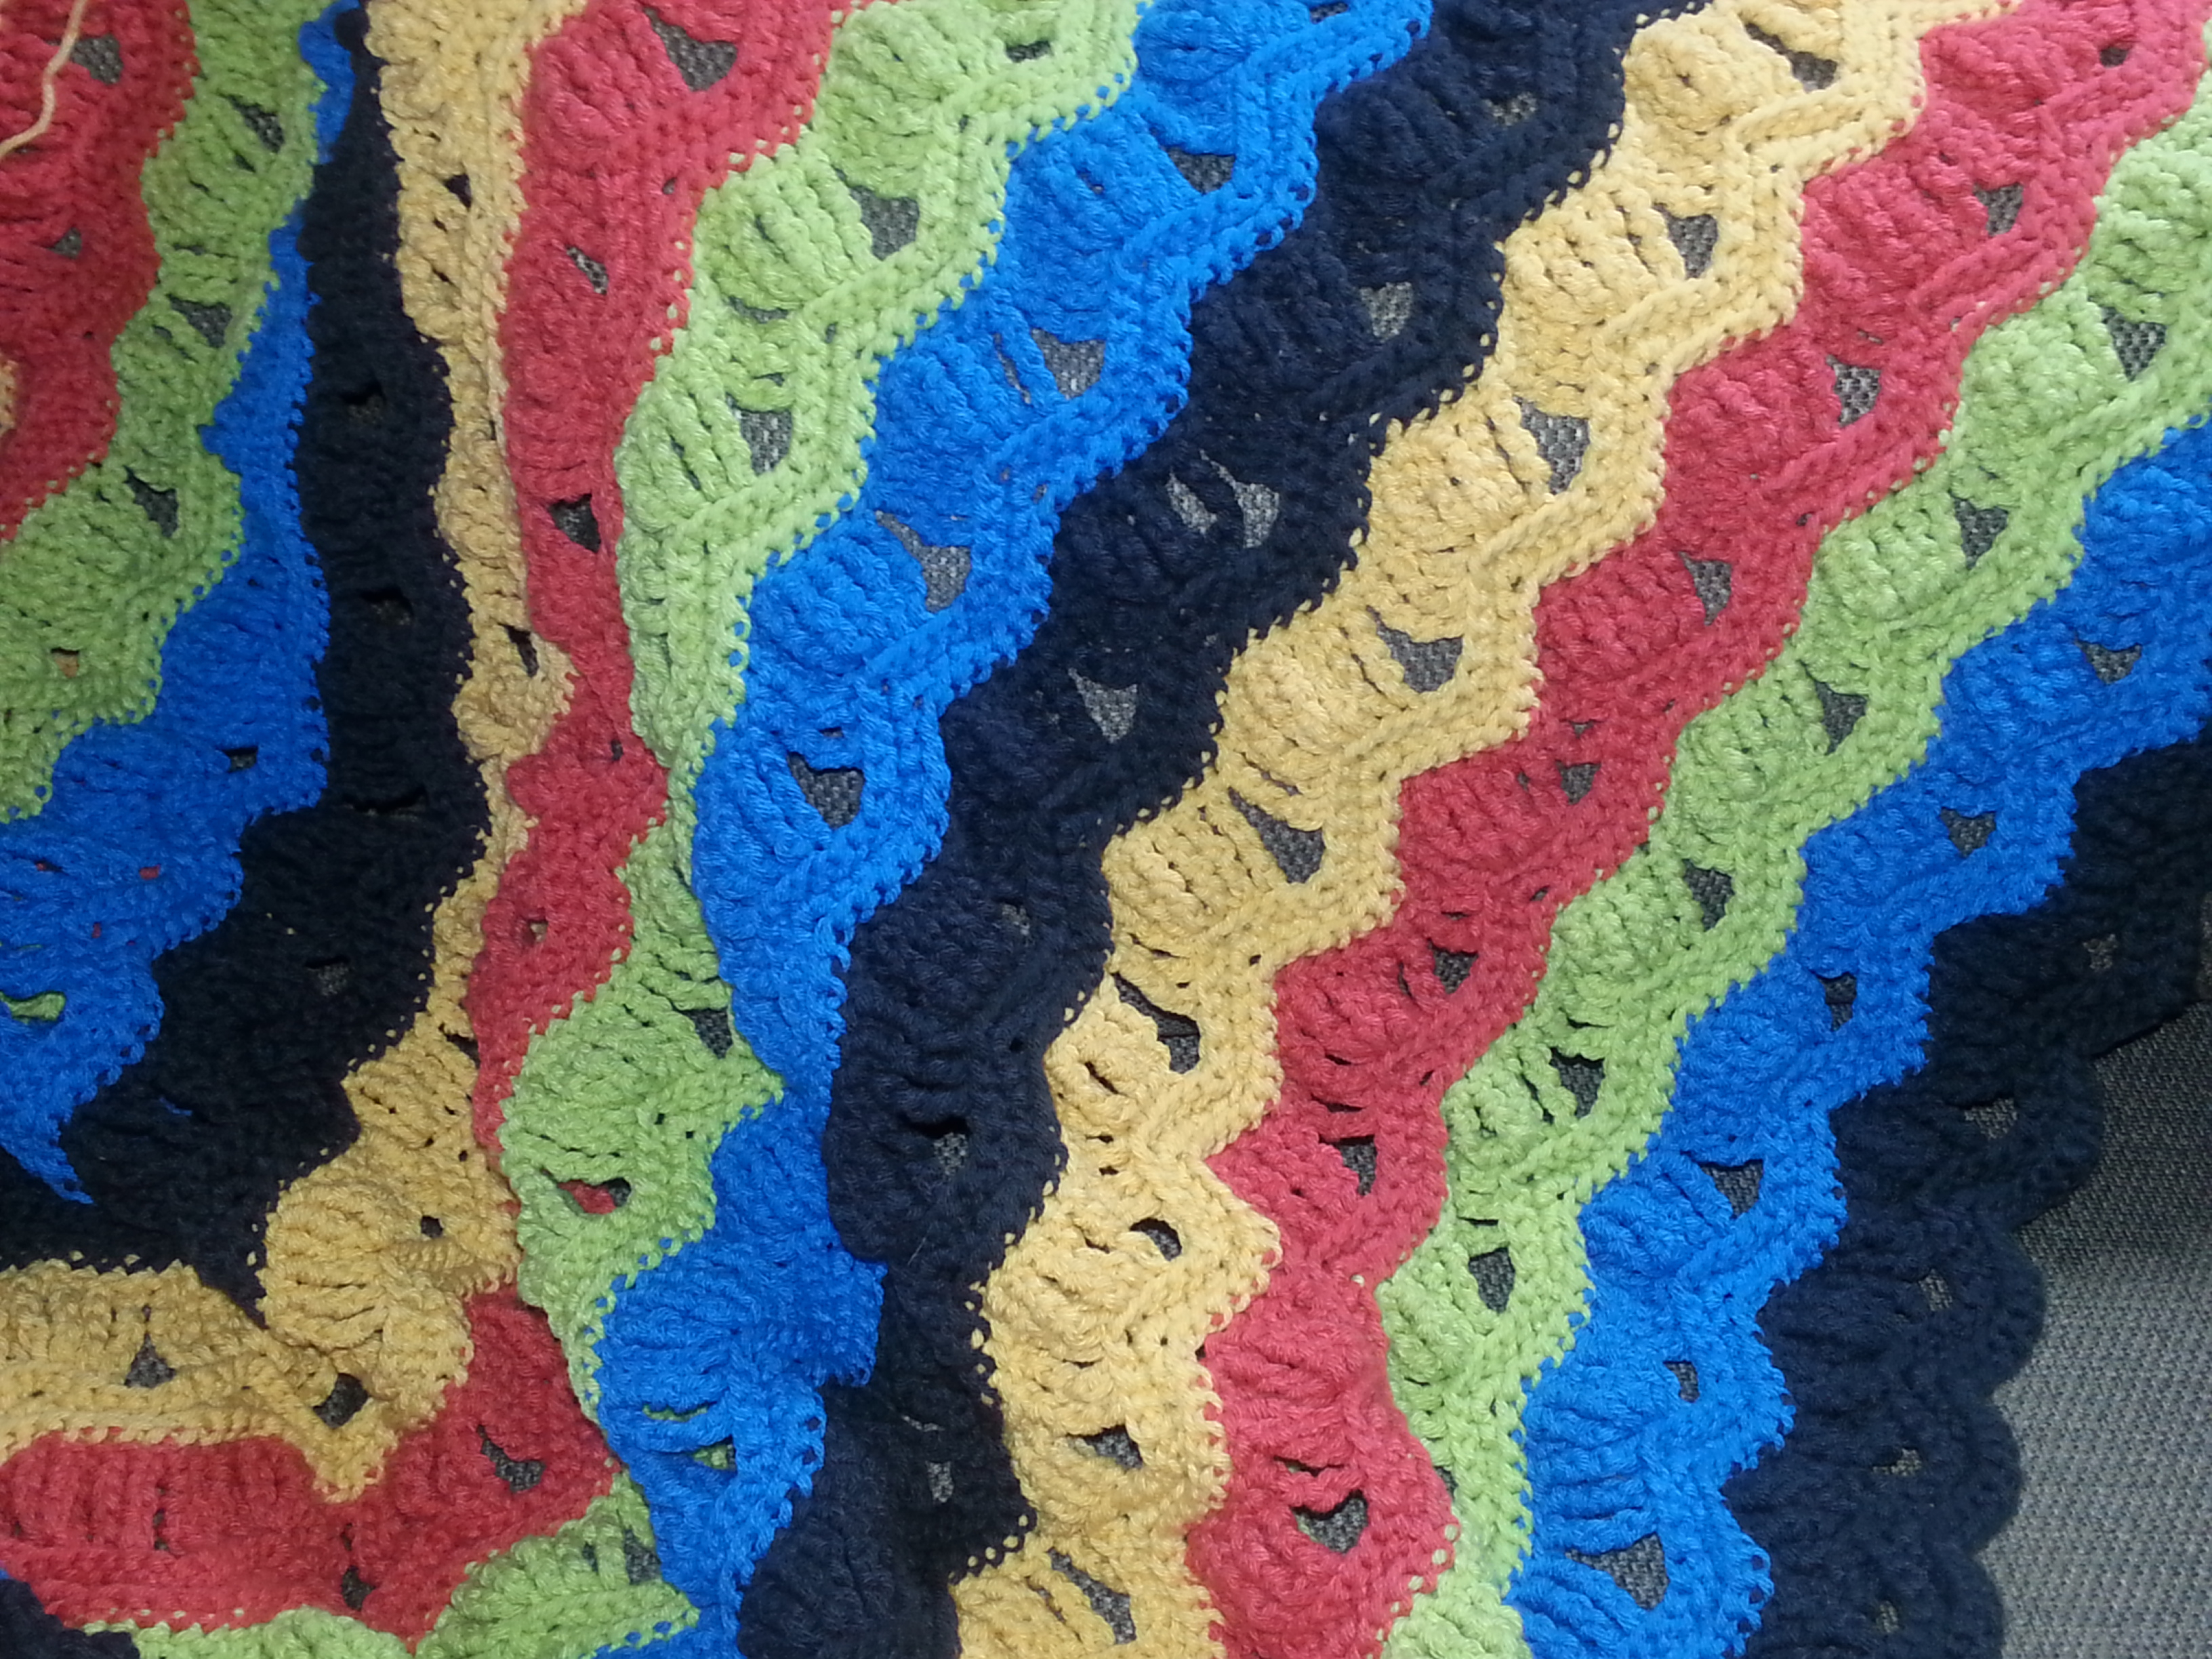 Ripple Pattern Crochet Vintage Fan Ripple Crochet Afghan My Life Made Crafty